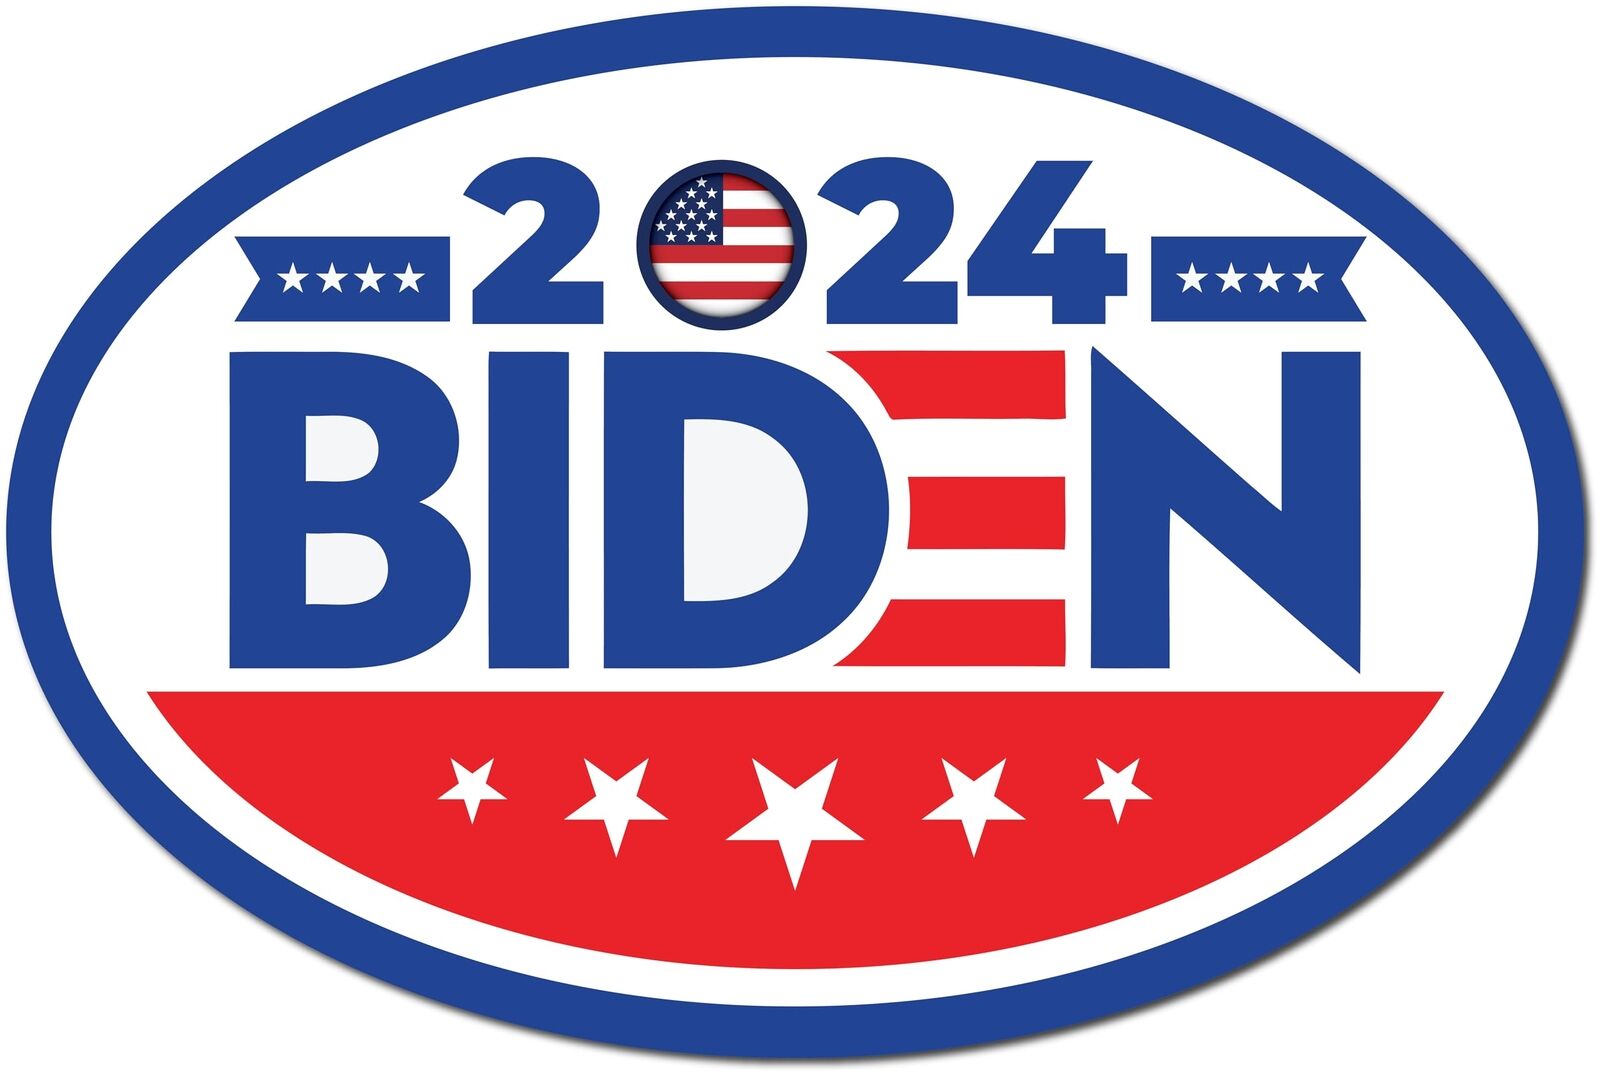 Joseph Joe Biden 2024 Democratic Party Political Election Magnet Decal, 4x6 inch